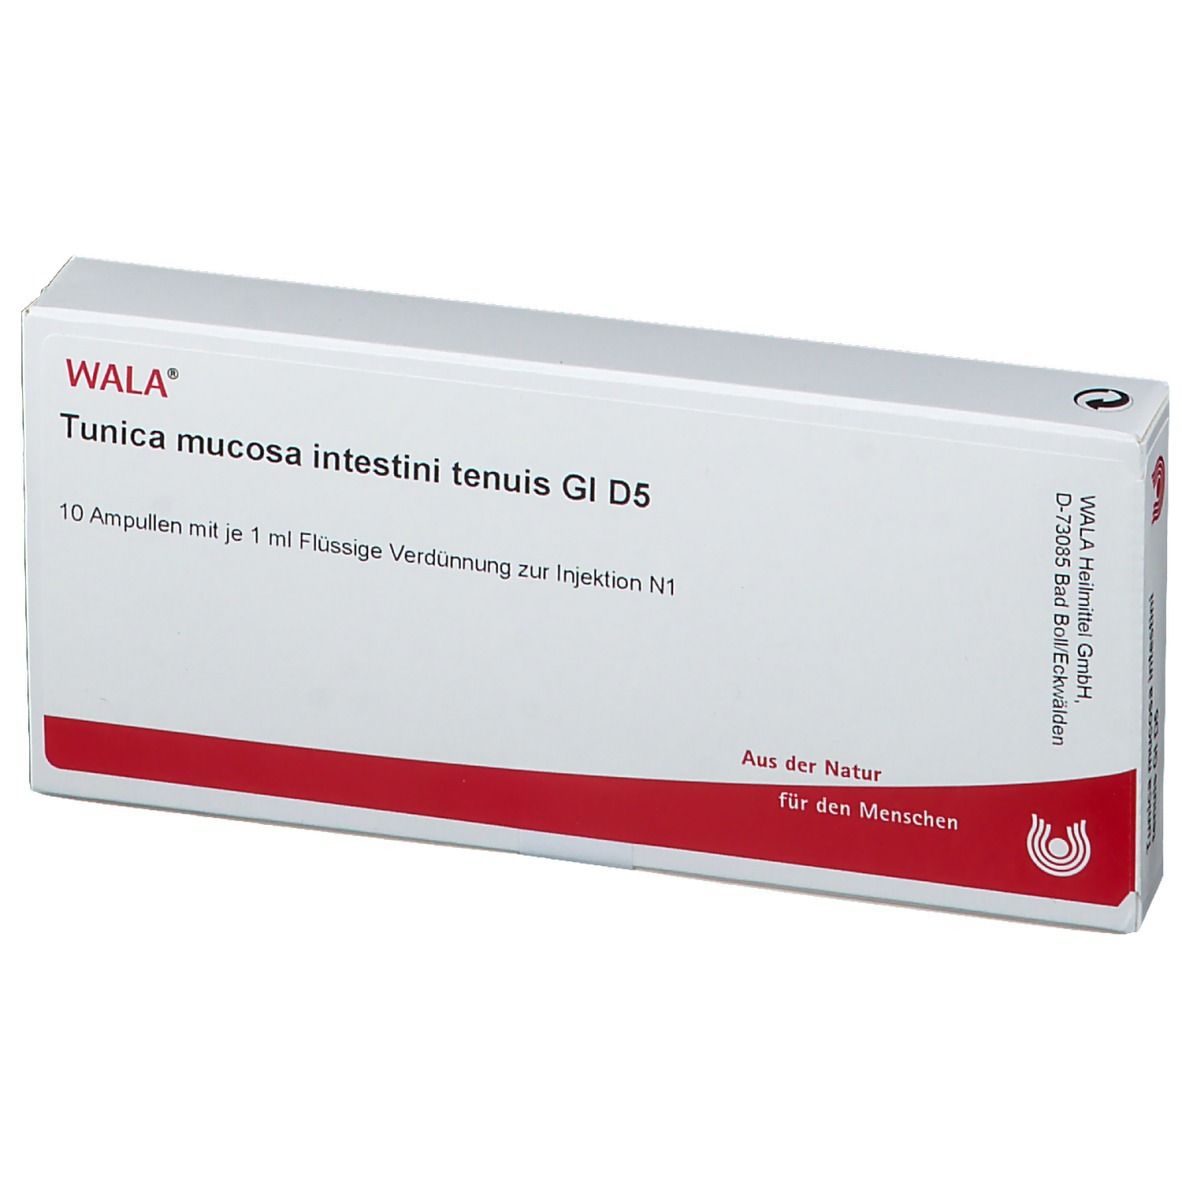 WALA® Tunica mucosa intestini tenuis Gl D 5